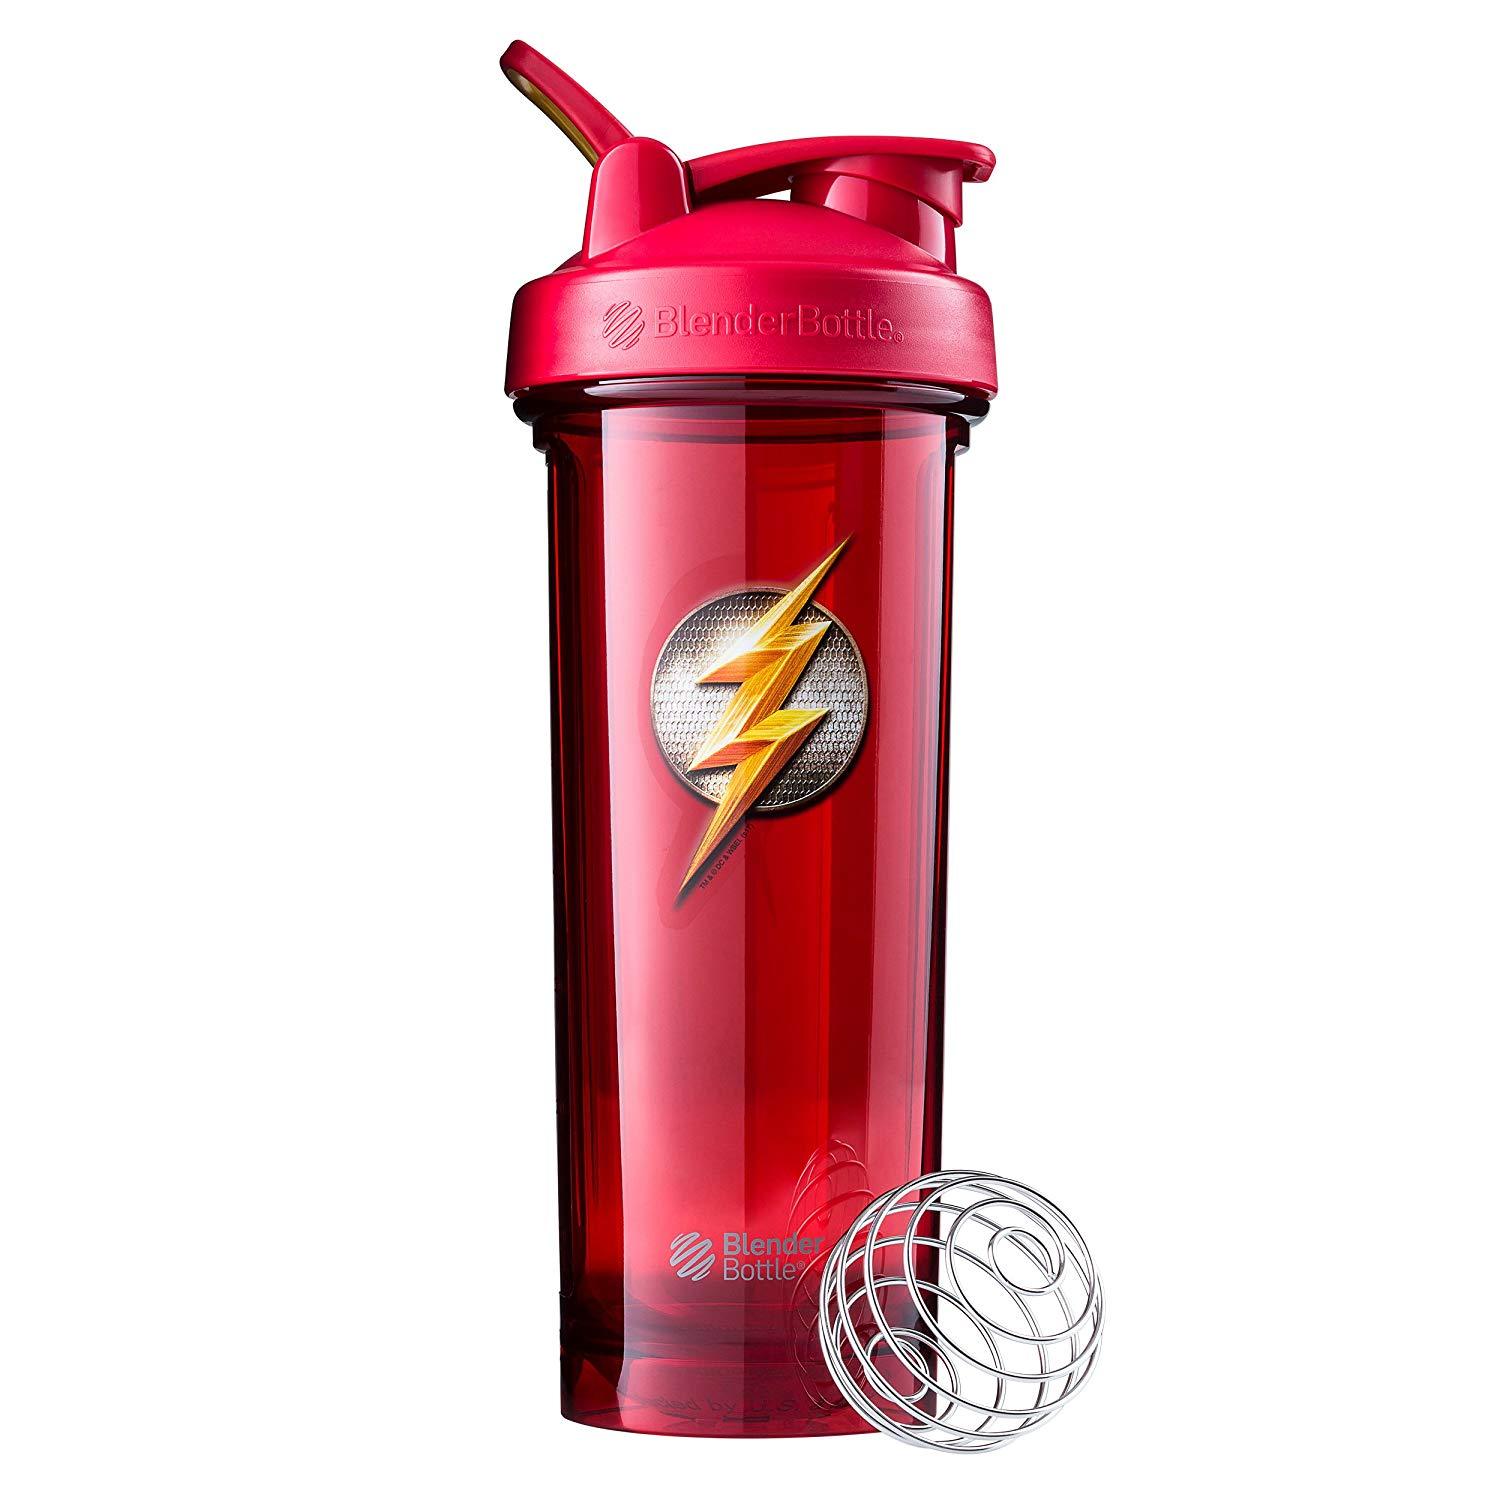 Blender Bottle Pro 32 - The Flash (32 oz) - Store 974 | ستور ٩٧٤